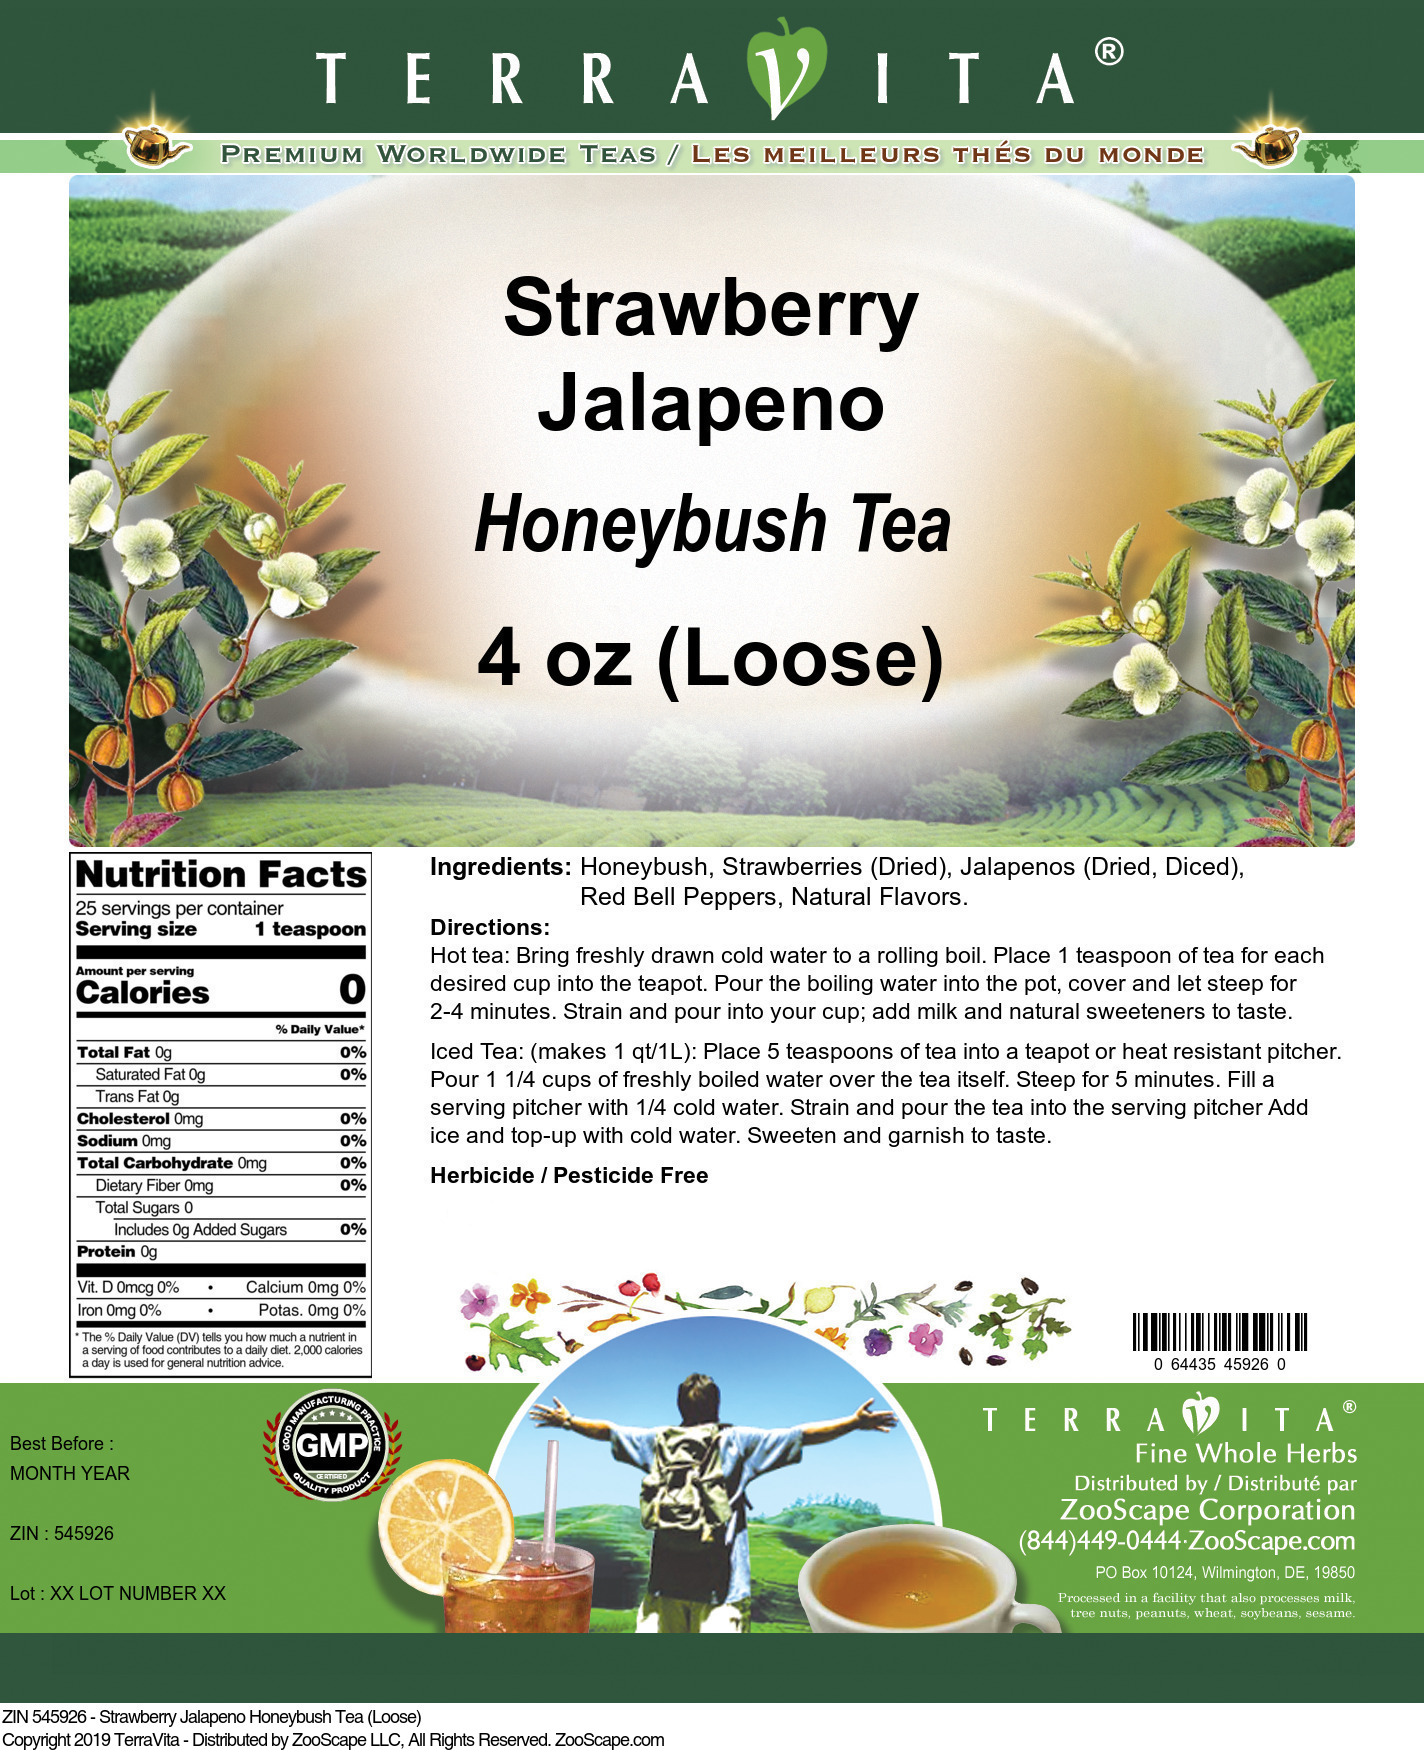 Strawberry Jalapeno Honeybush Tea (Loose) - Label